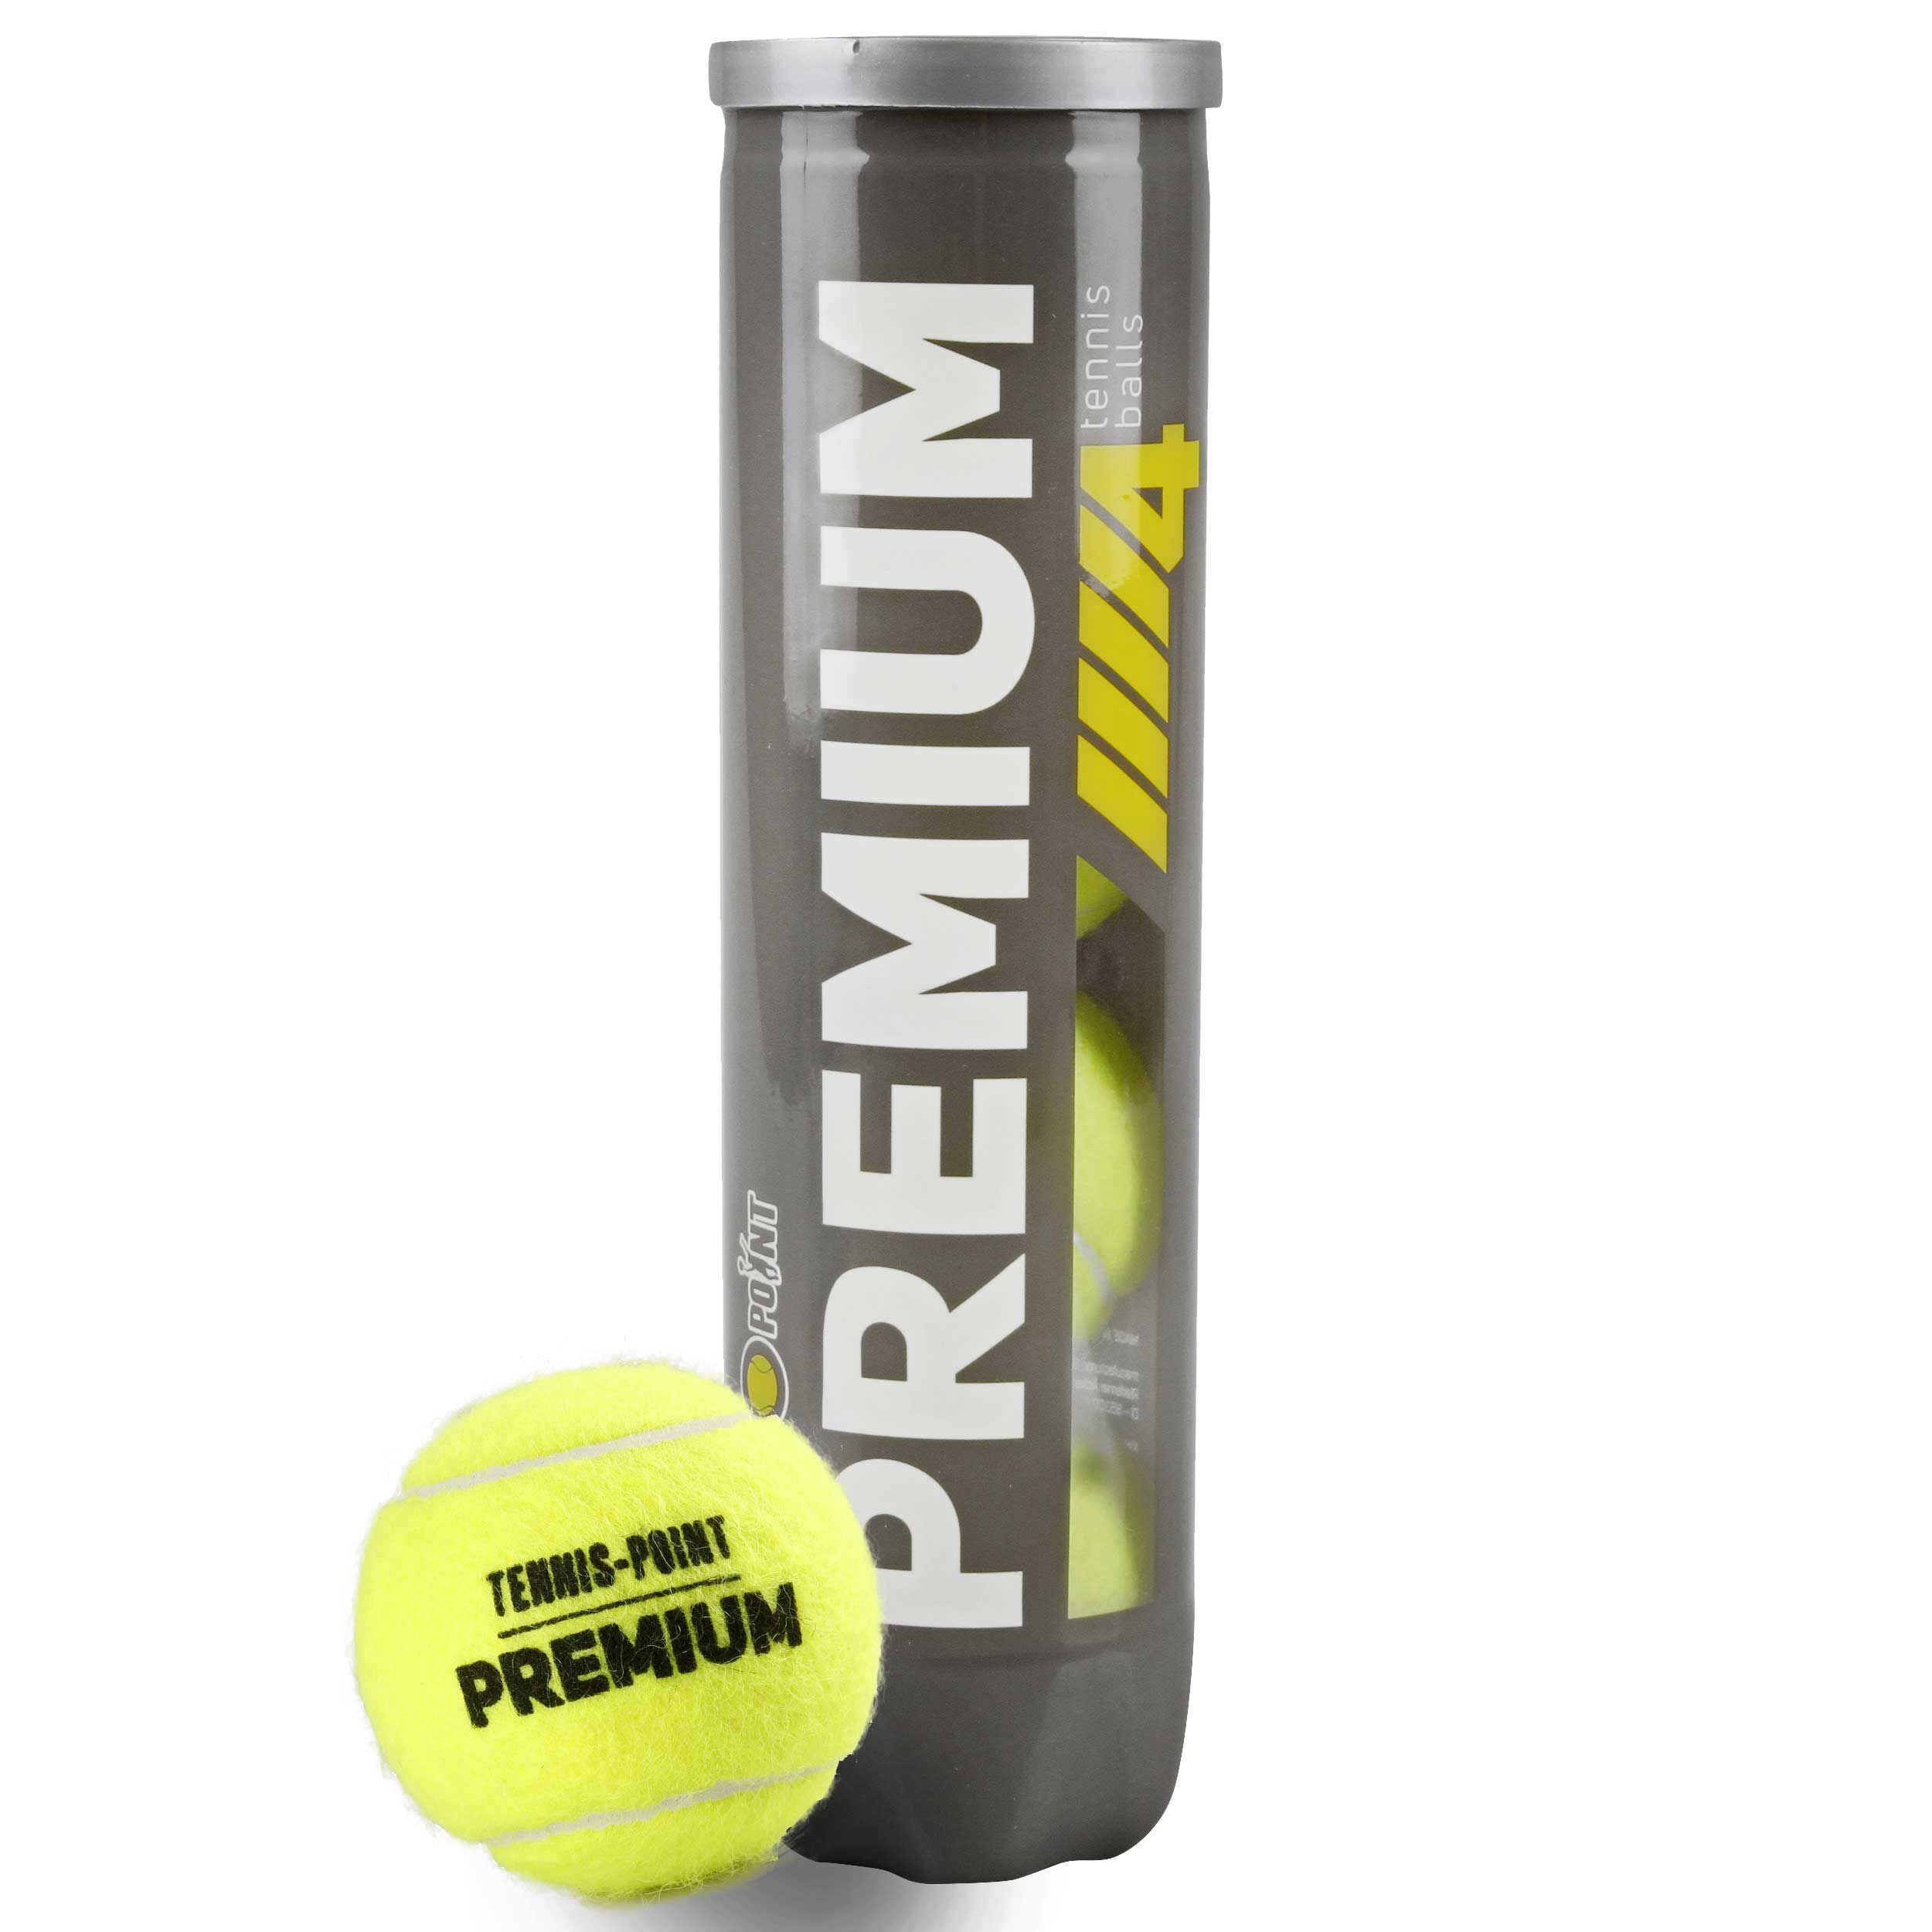 buy Tennis-Point Premium 4 Ball Tube online Tennis-Point